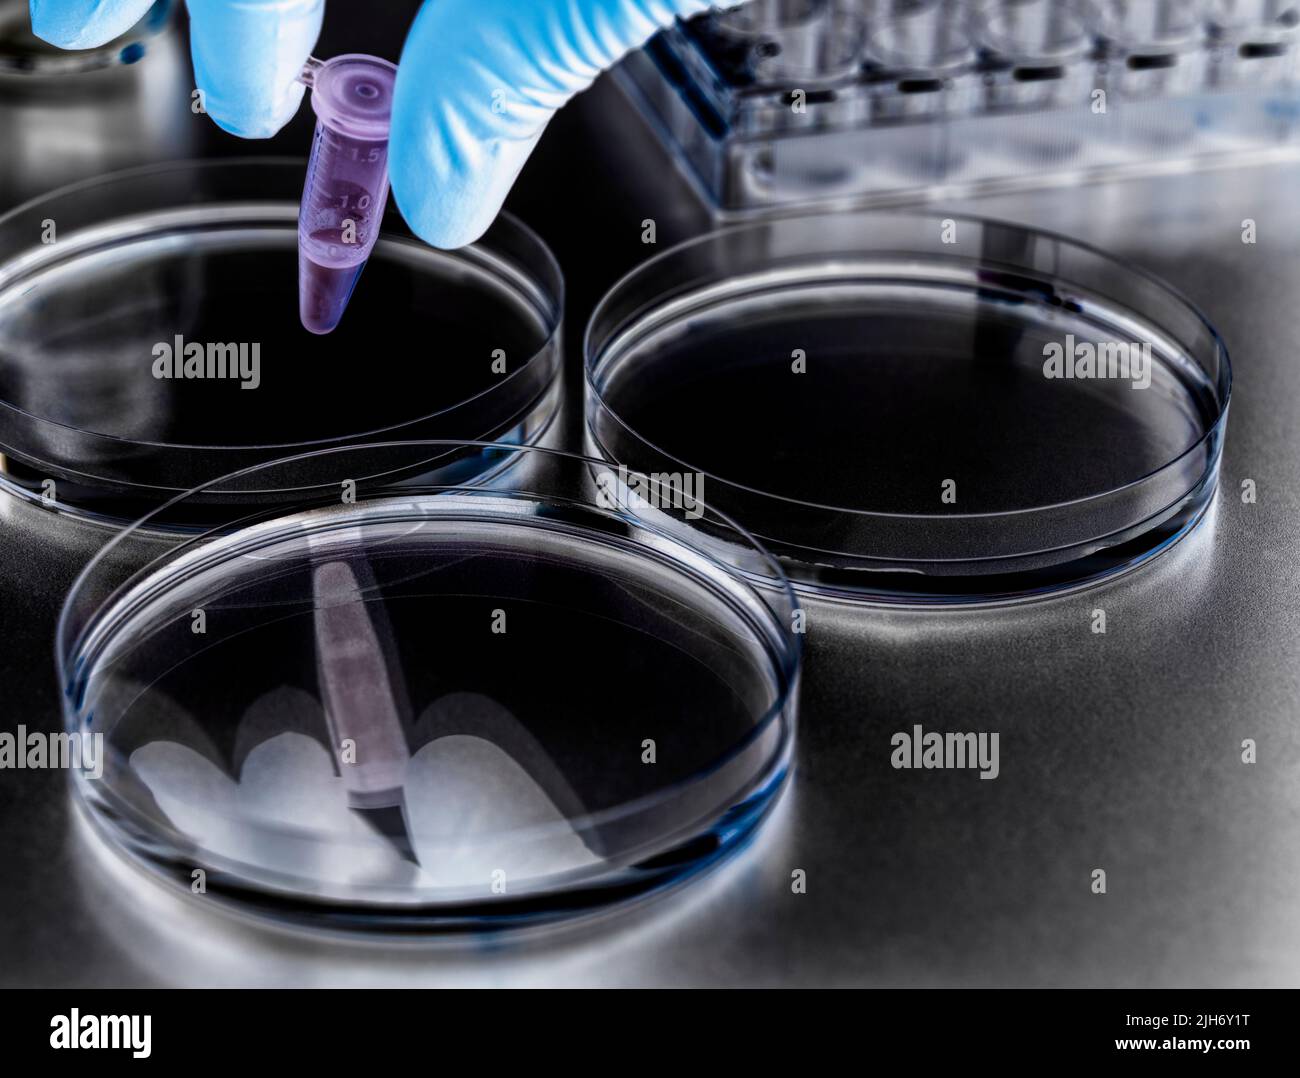 Biotechnology Stock Photo